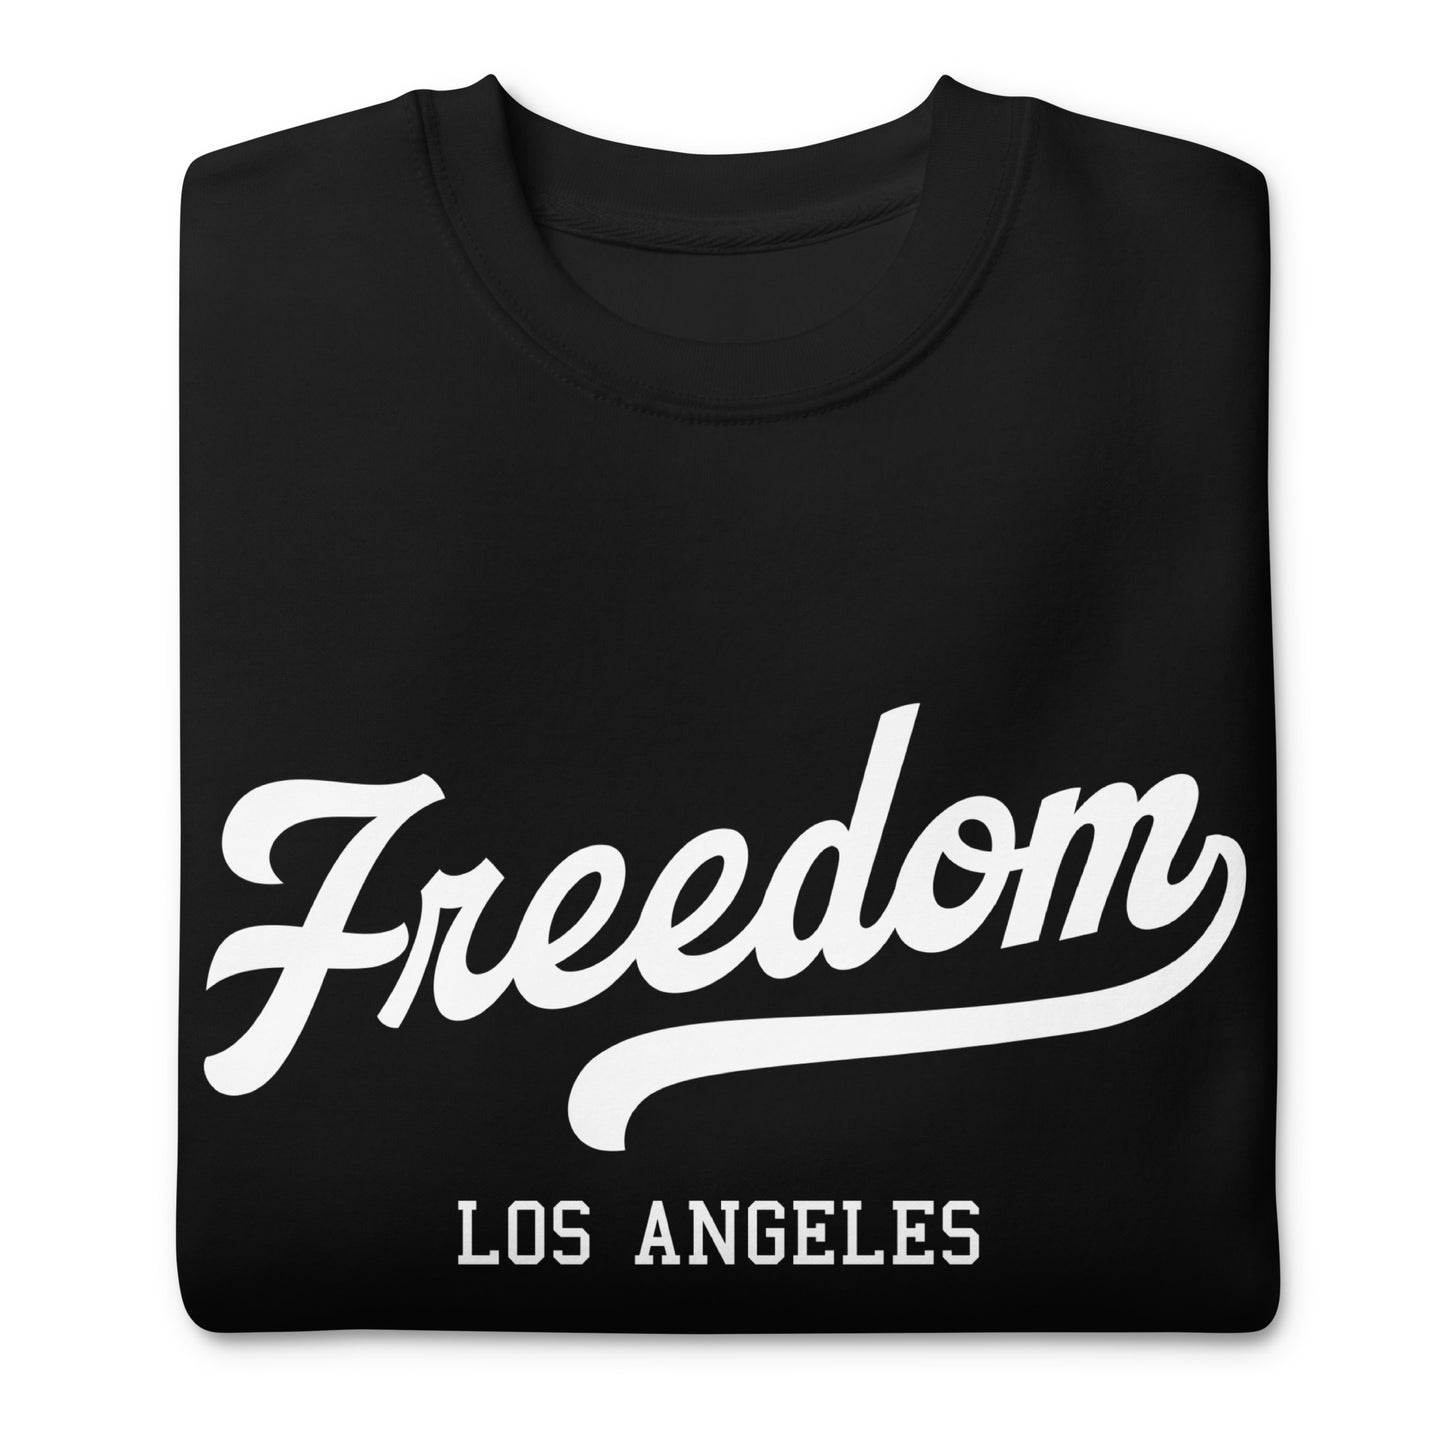 Freedom Los Angeles Sweatshirt